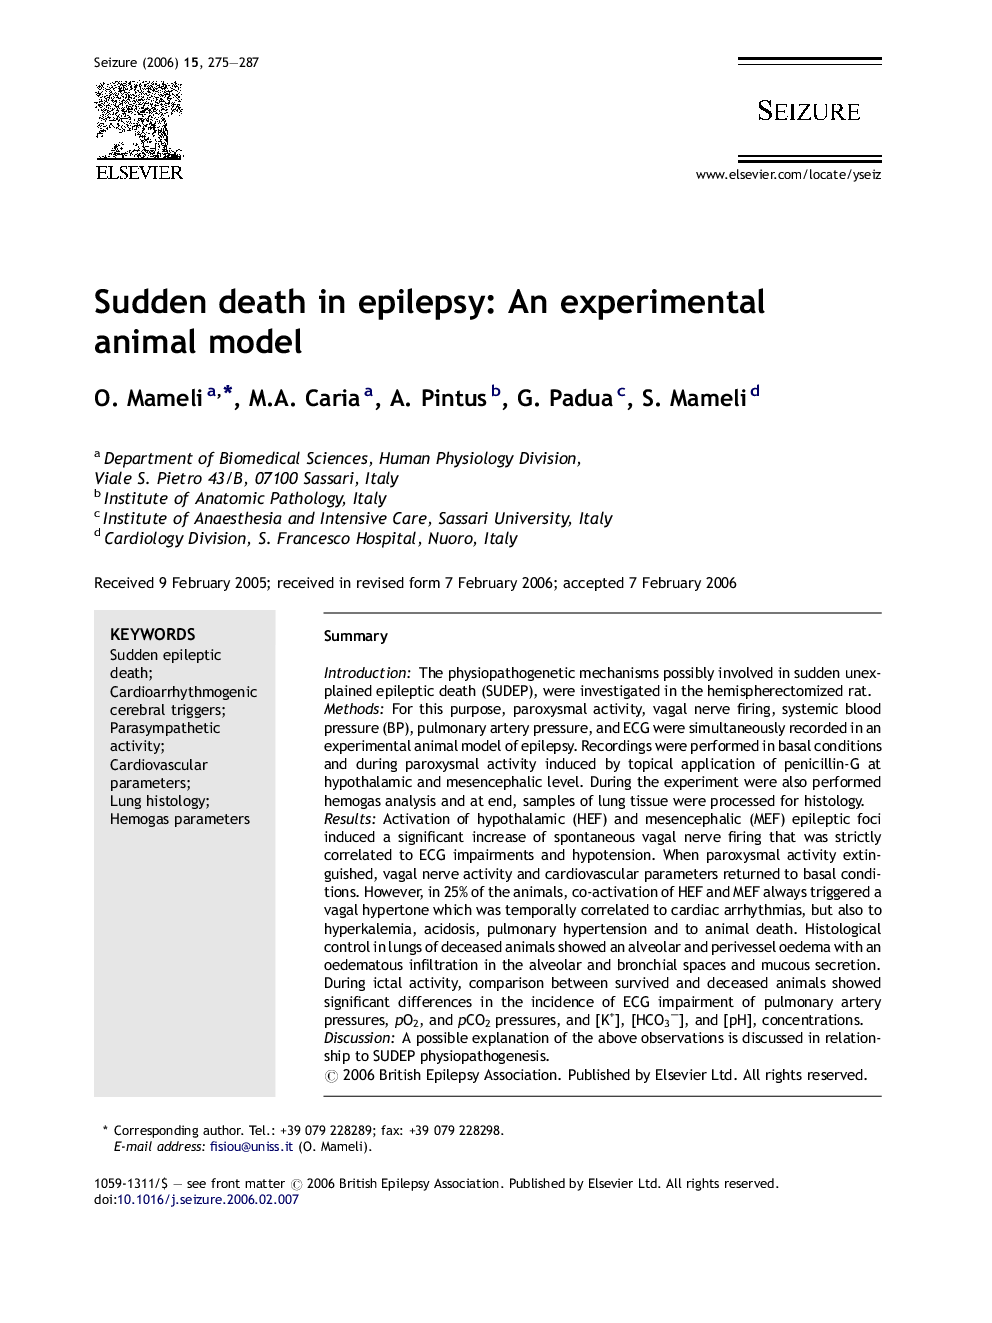 Sudden death in epilepsy: An experimental animal model